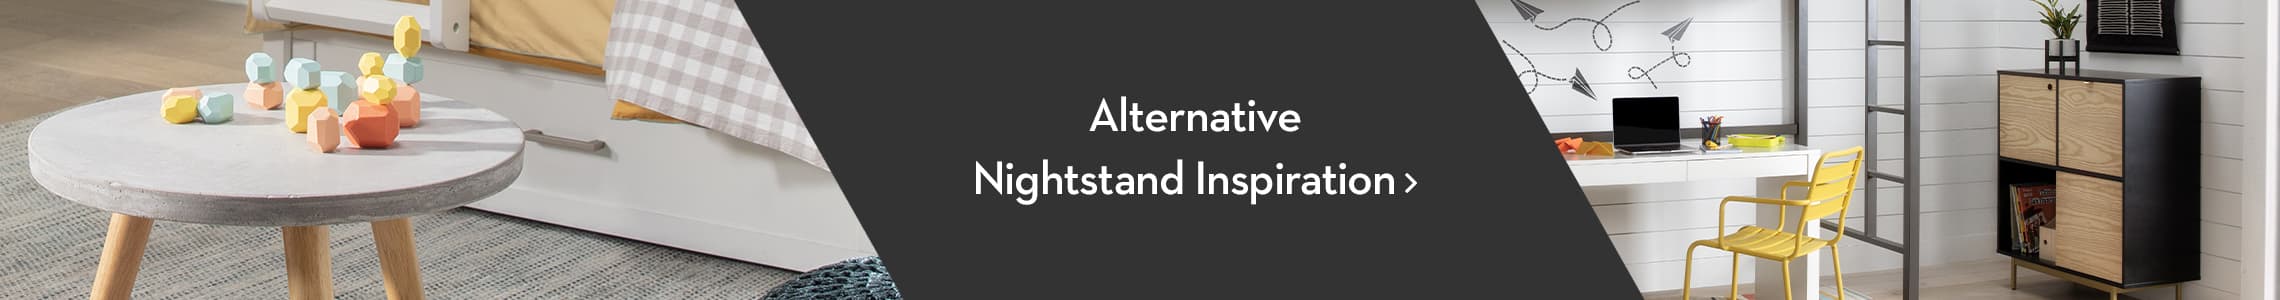 Alternative Nightstand Inspiration